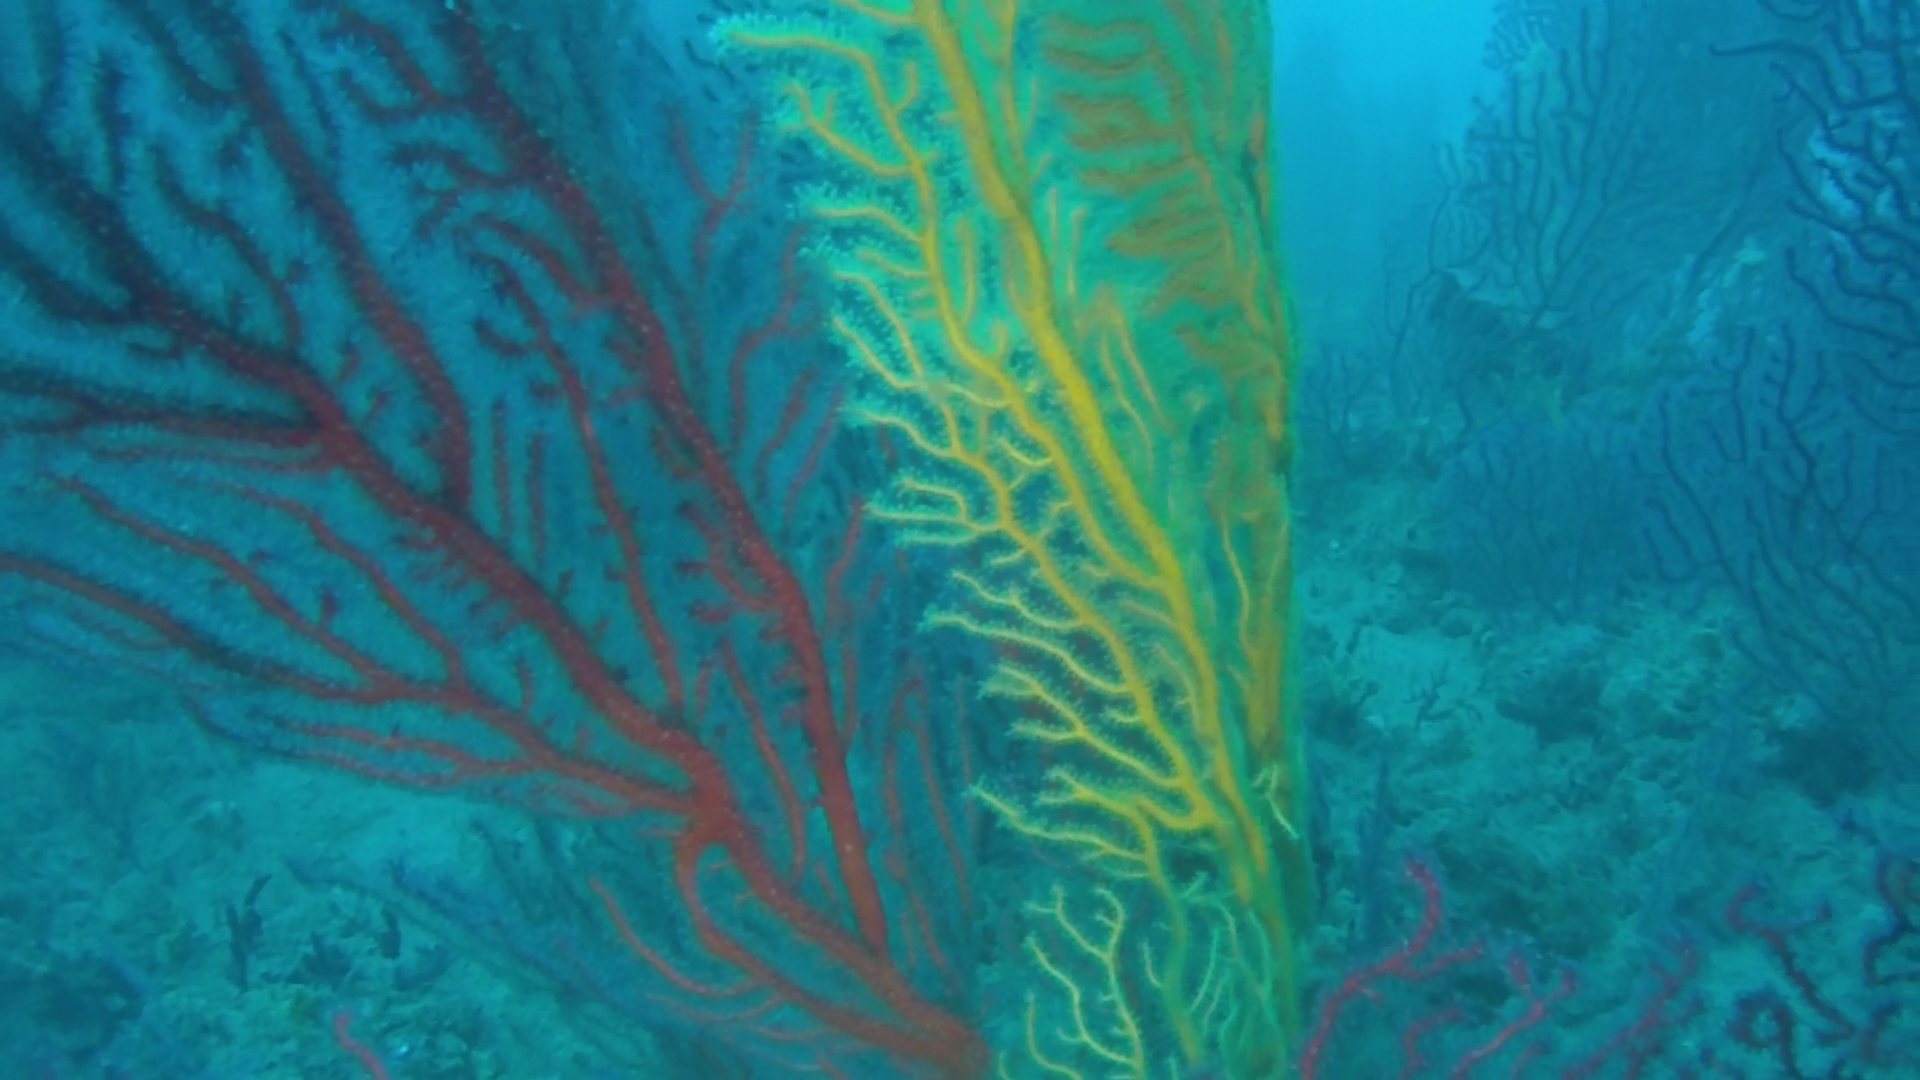 Il falso corallo nero - Savalia savaglia - false black coral - Gorgonia rossa - Paramuricea clavata - intotheblue.it